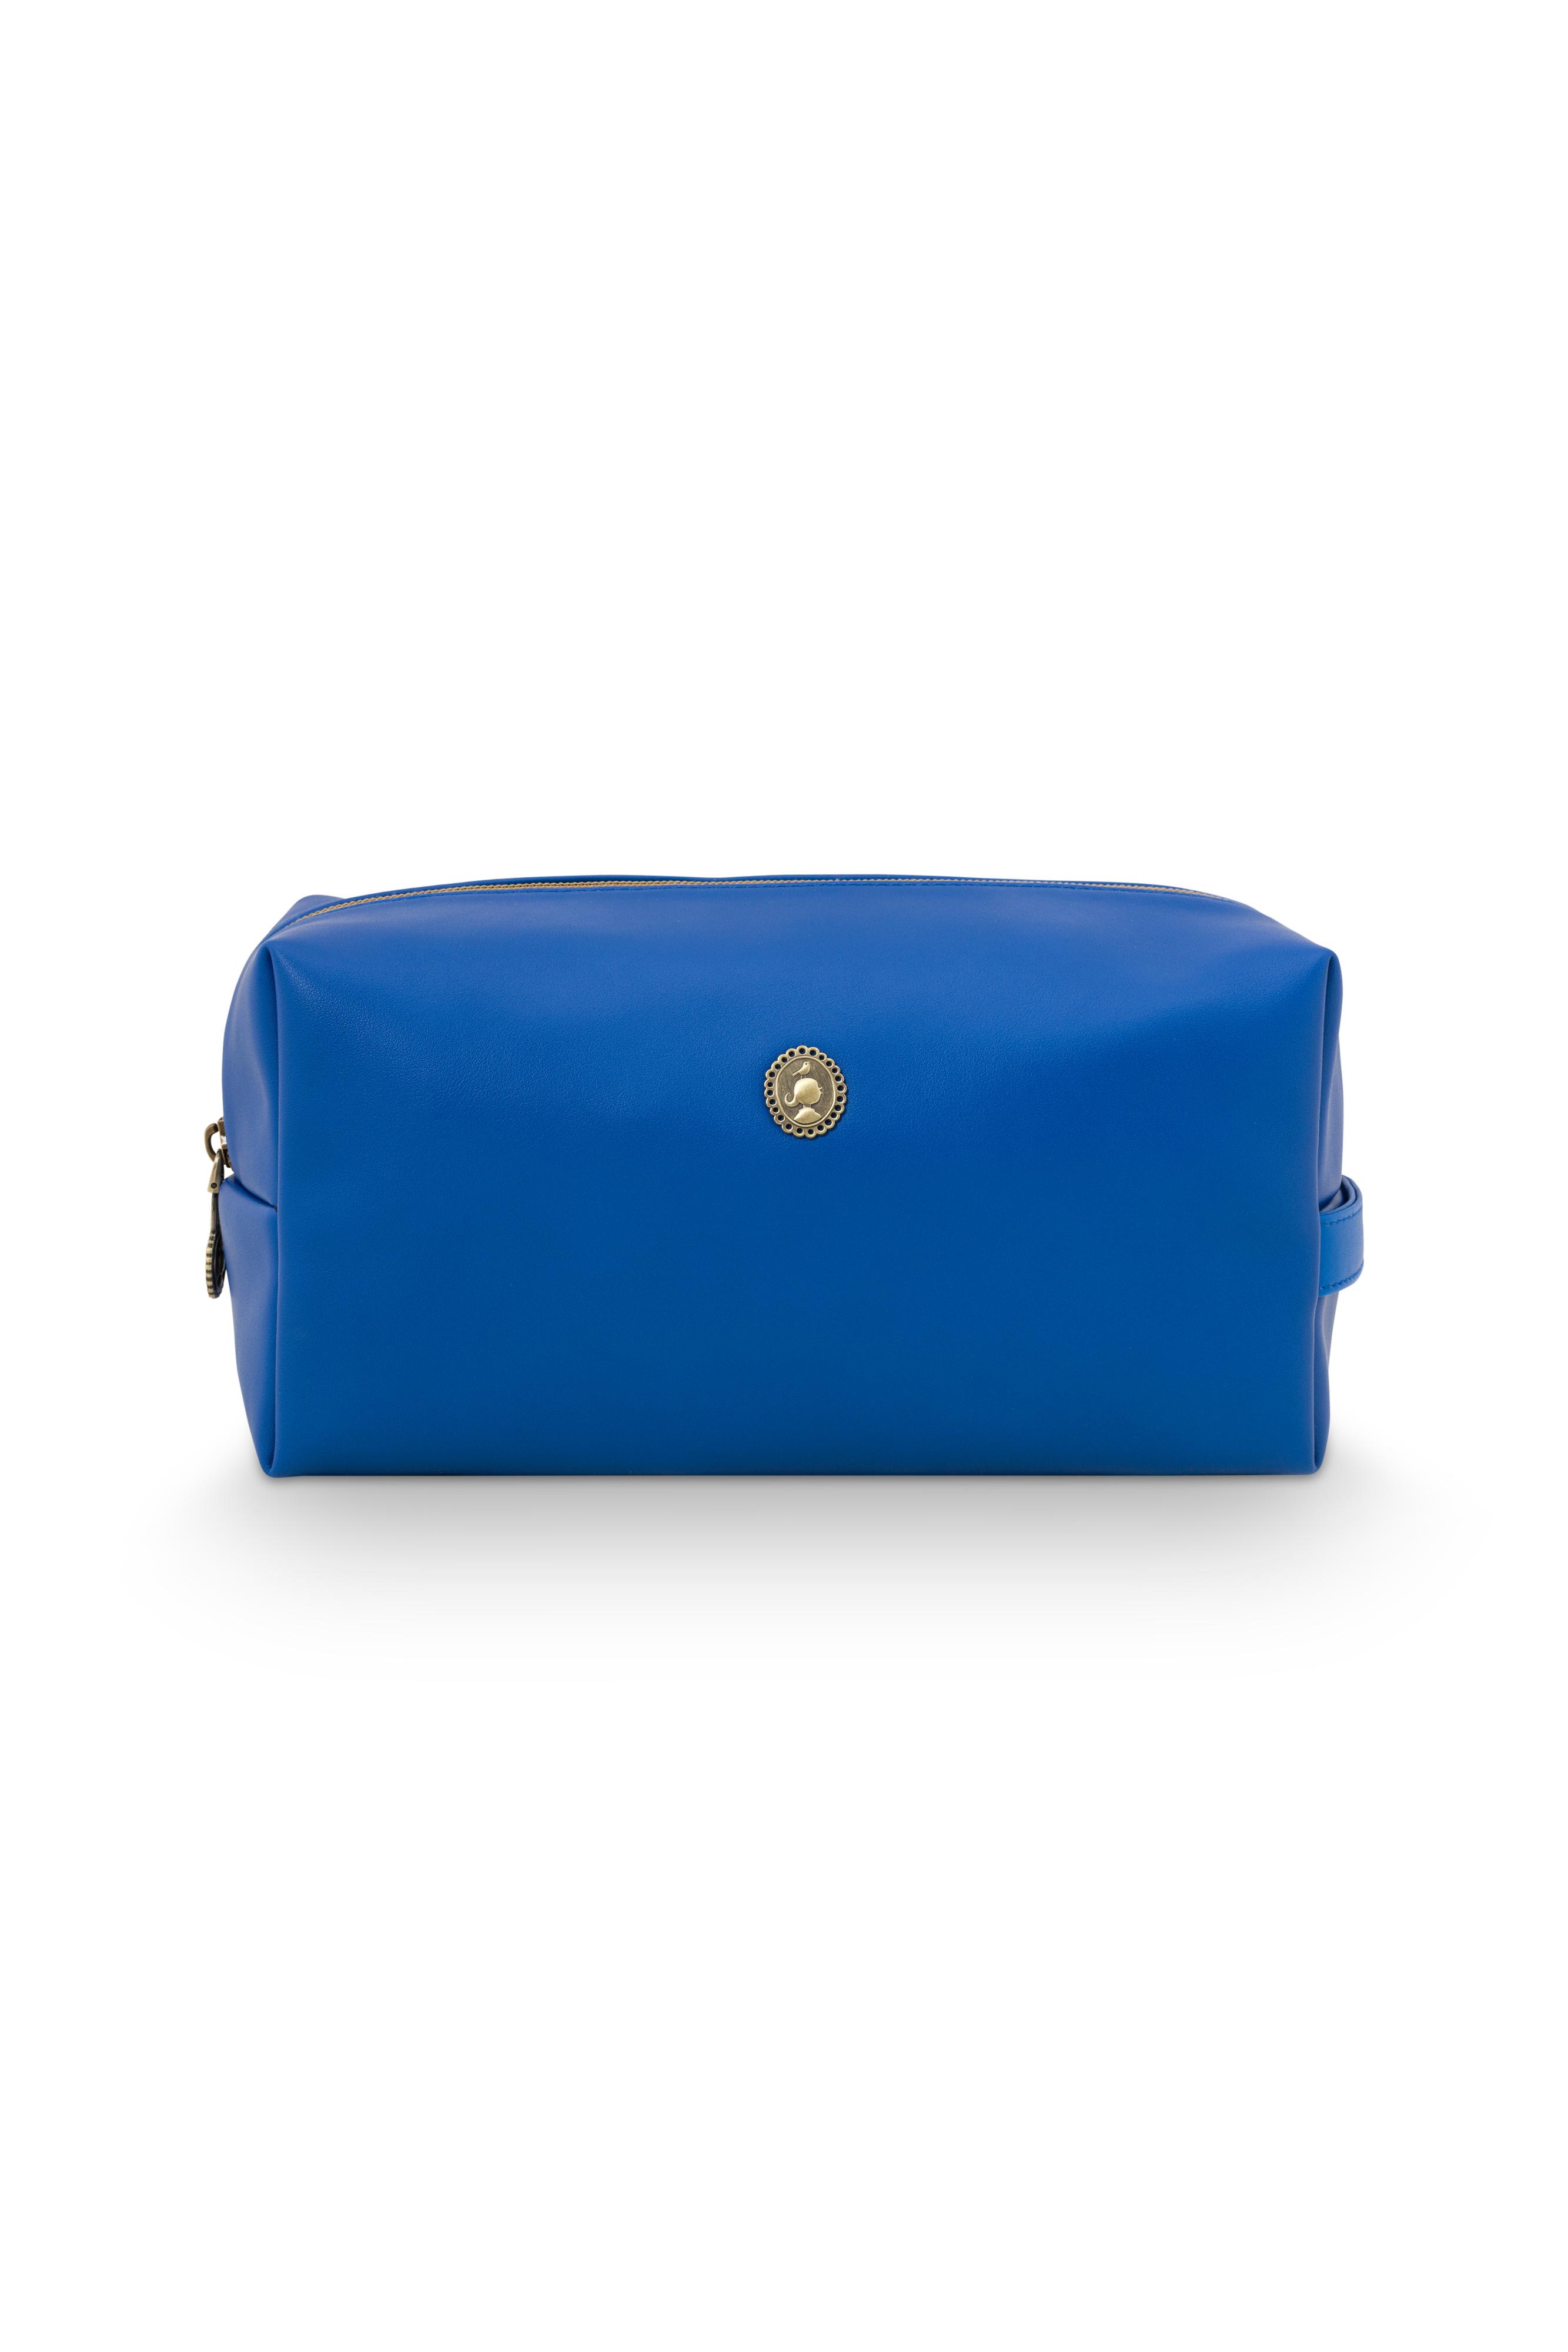 Coco Cosmetic Bag Medium Blue 21.5x10x10.5cm Gift